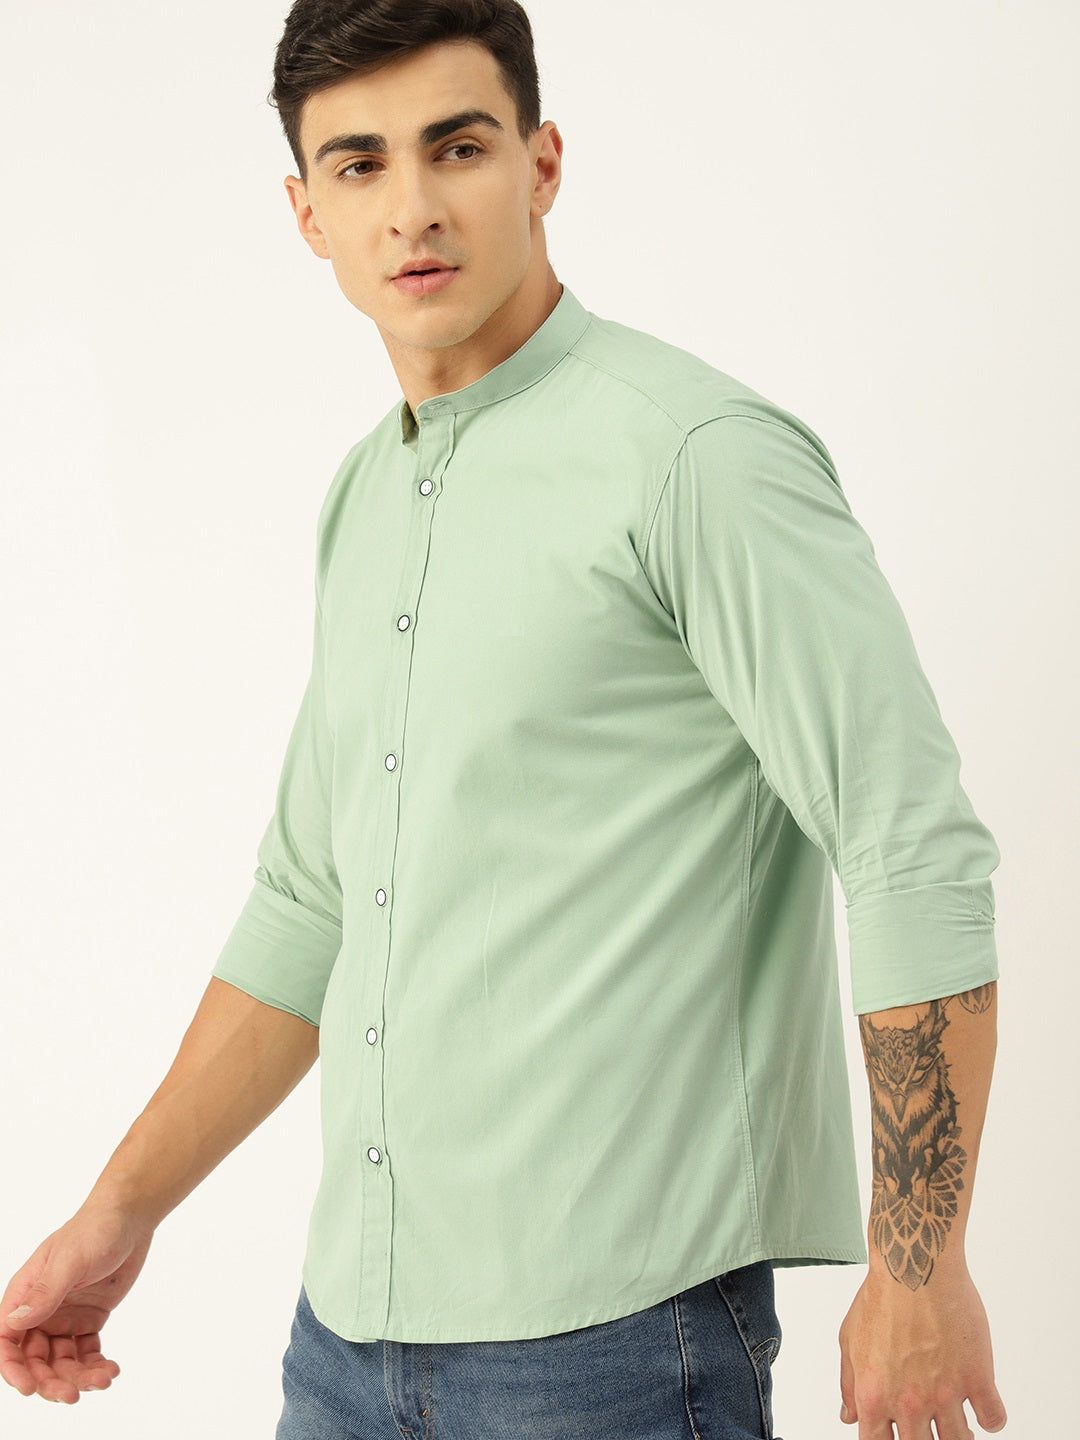 Luxrio Men's Solid Slim Fit Mandarin Collared Casual Shirt Green